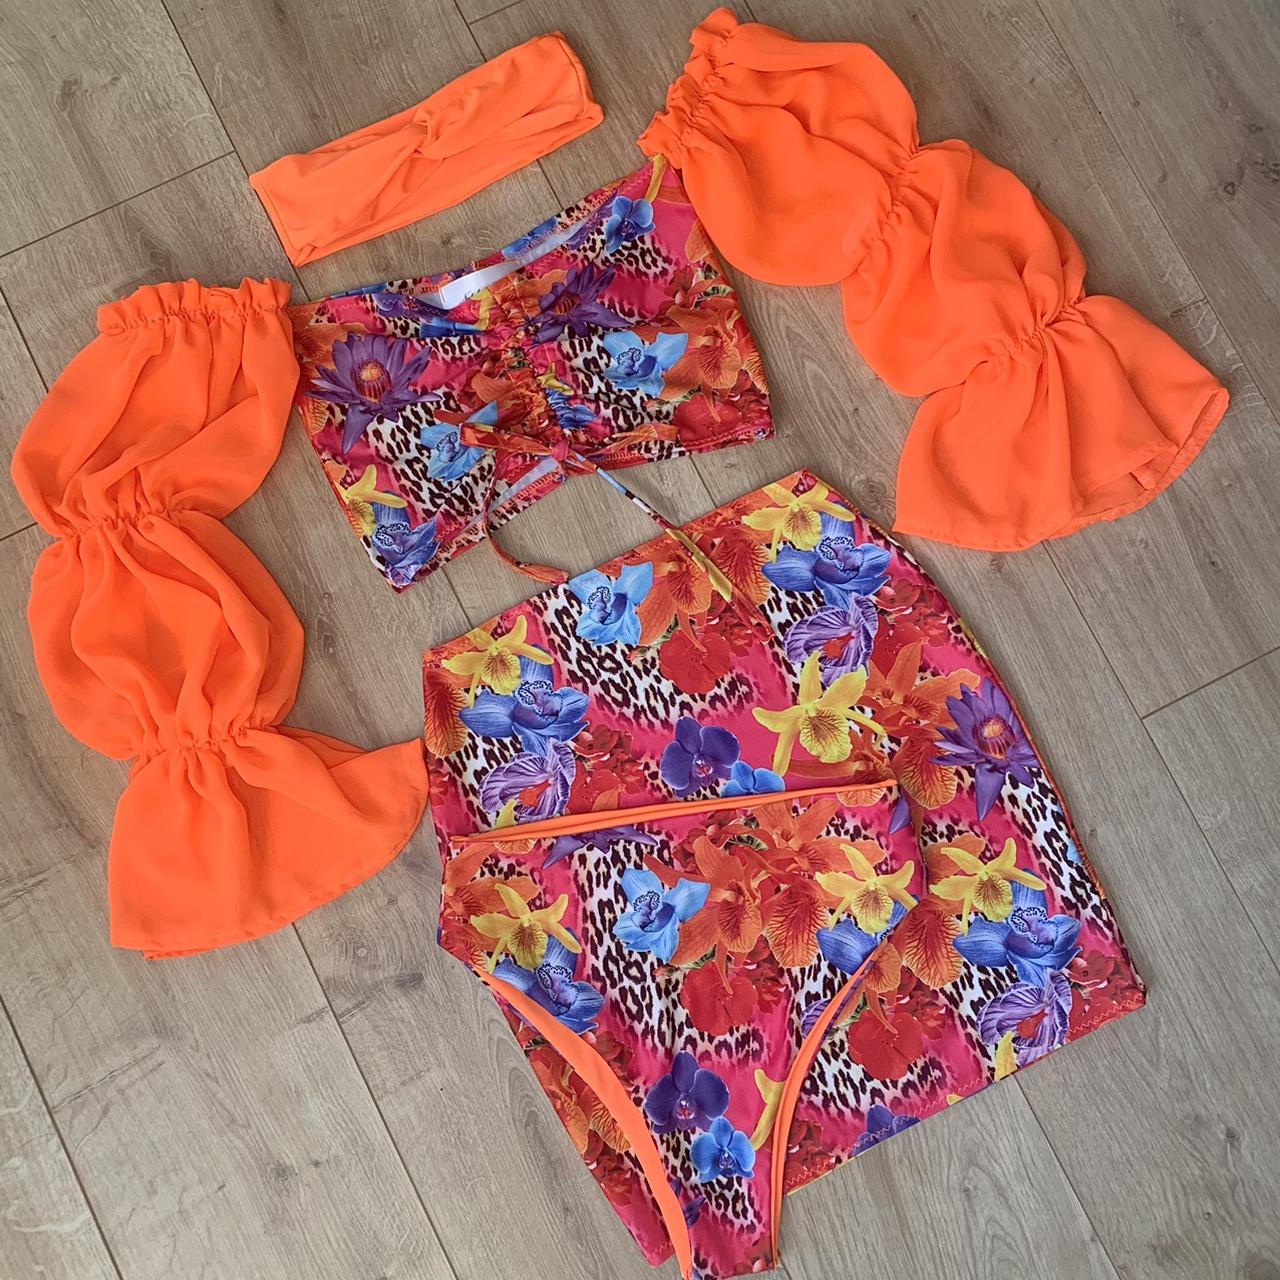 Women's Orange and Pink Bikinis-and-tankini-sets | Depop